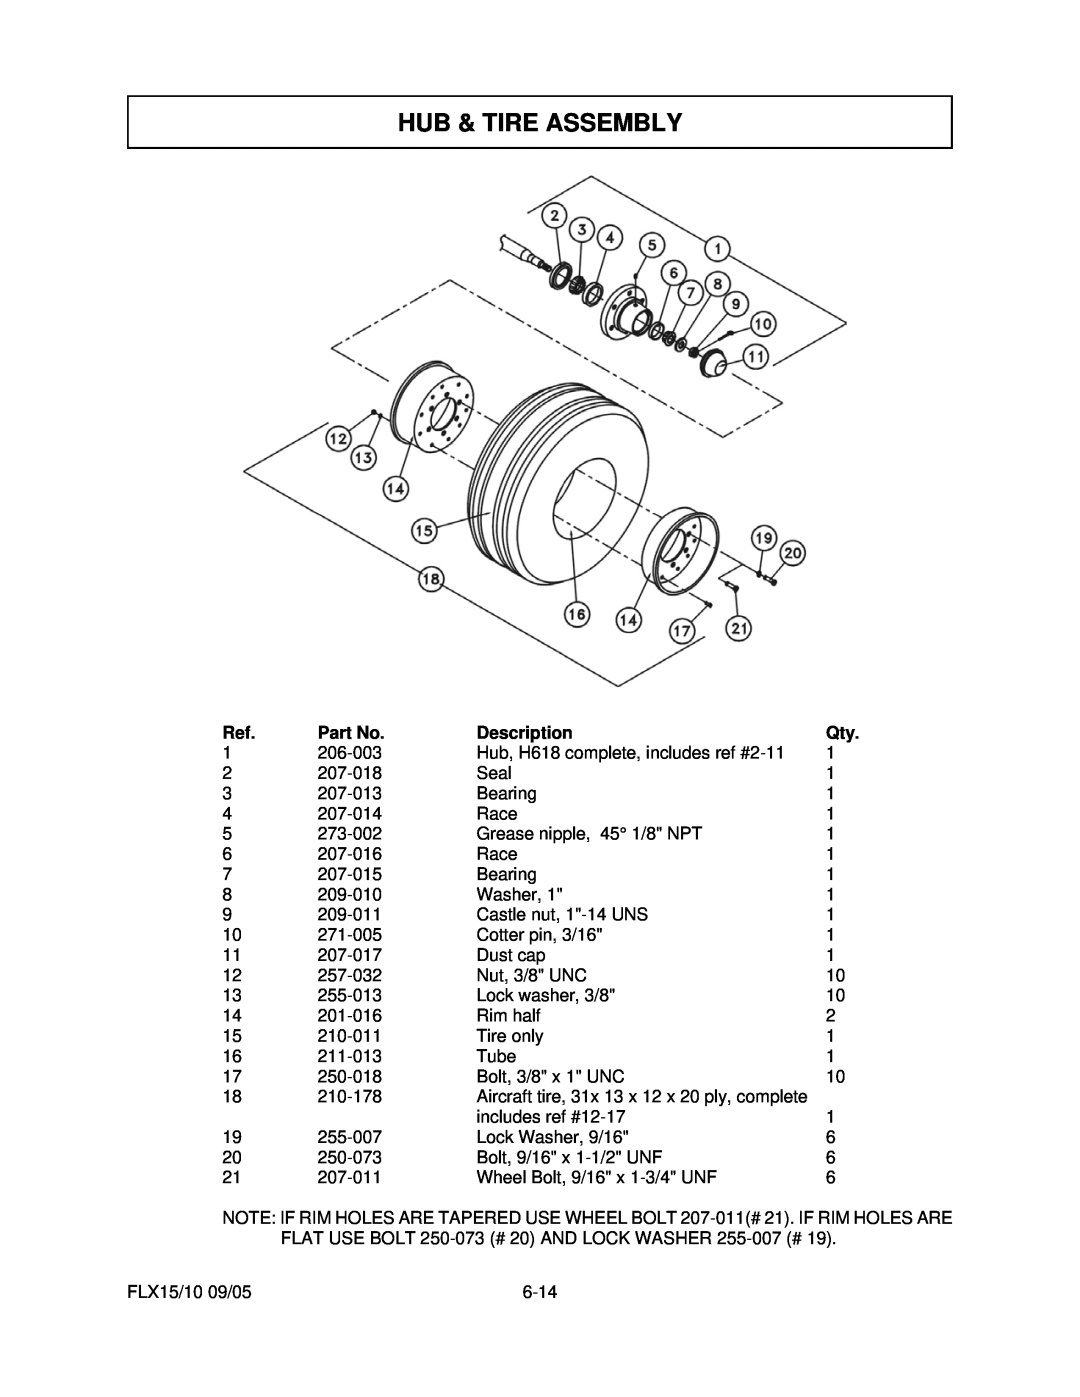 Tiger Mowers FLX10, FLX15 manual Hub & Tire Assembly, Description 